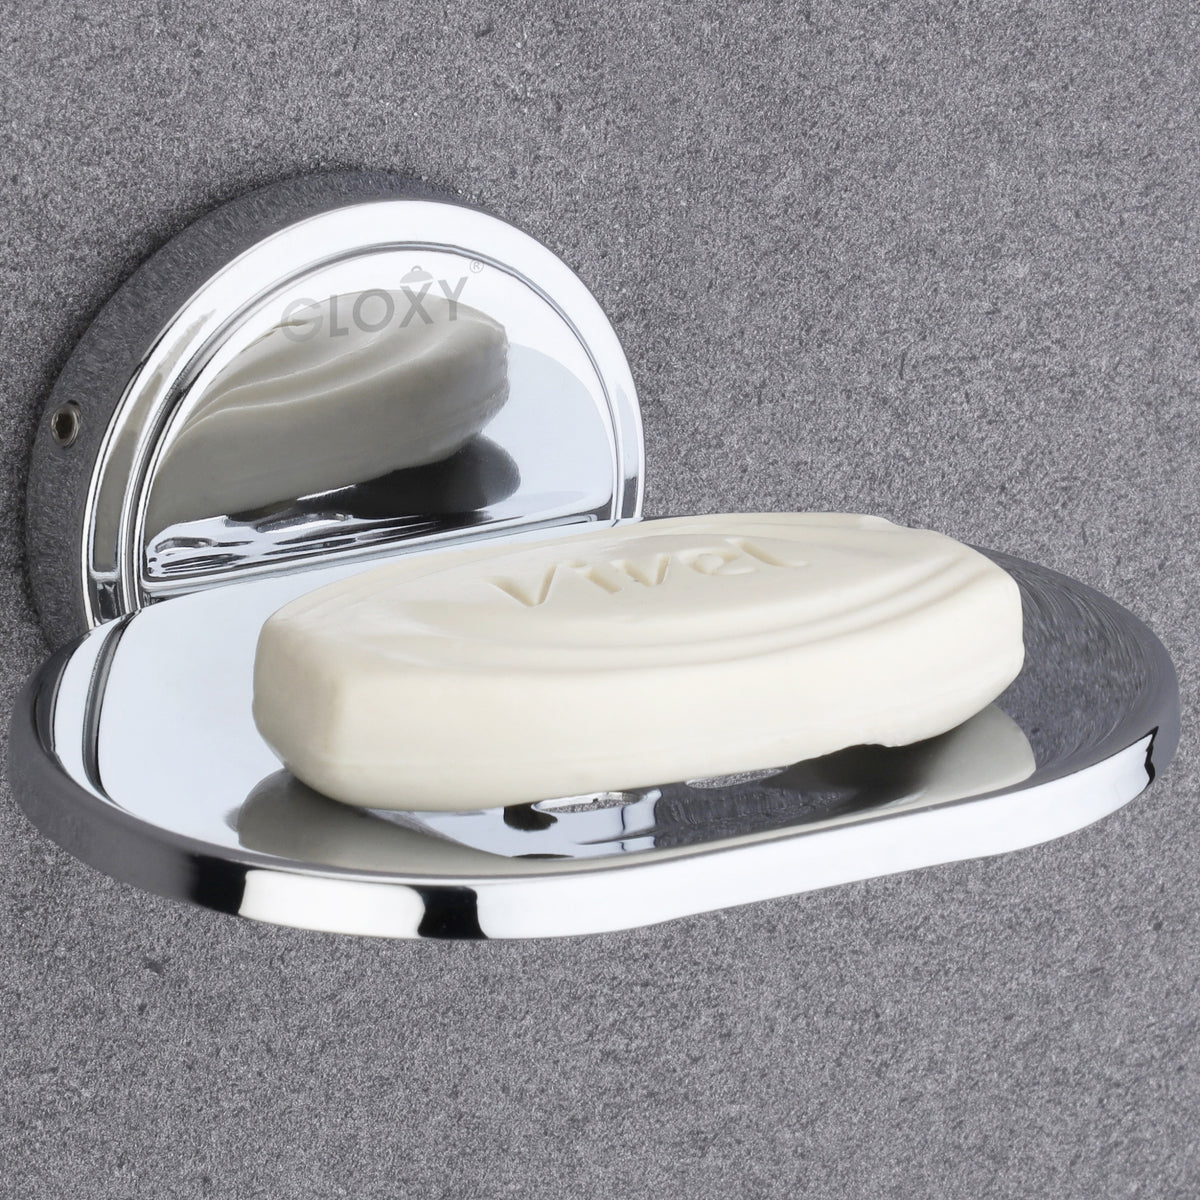 Oval Shape Stainless Steel Silver Single Soap Holder